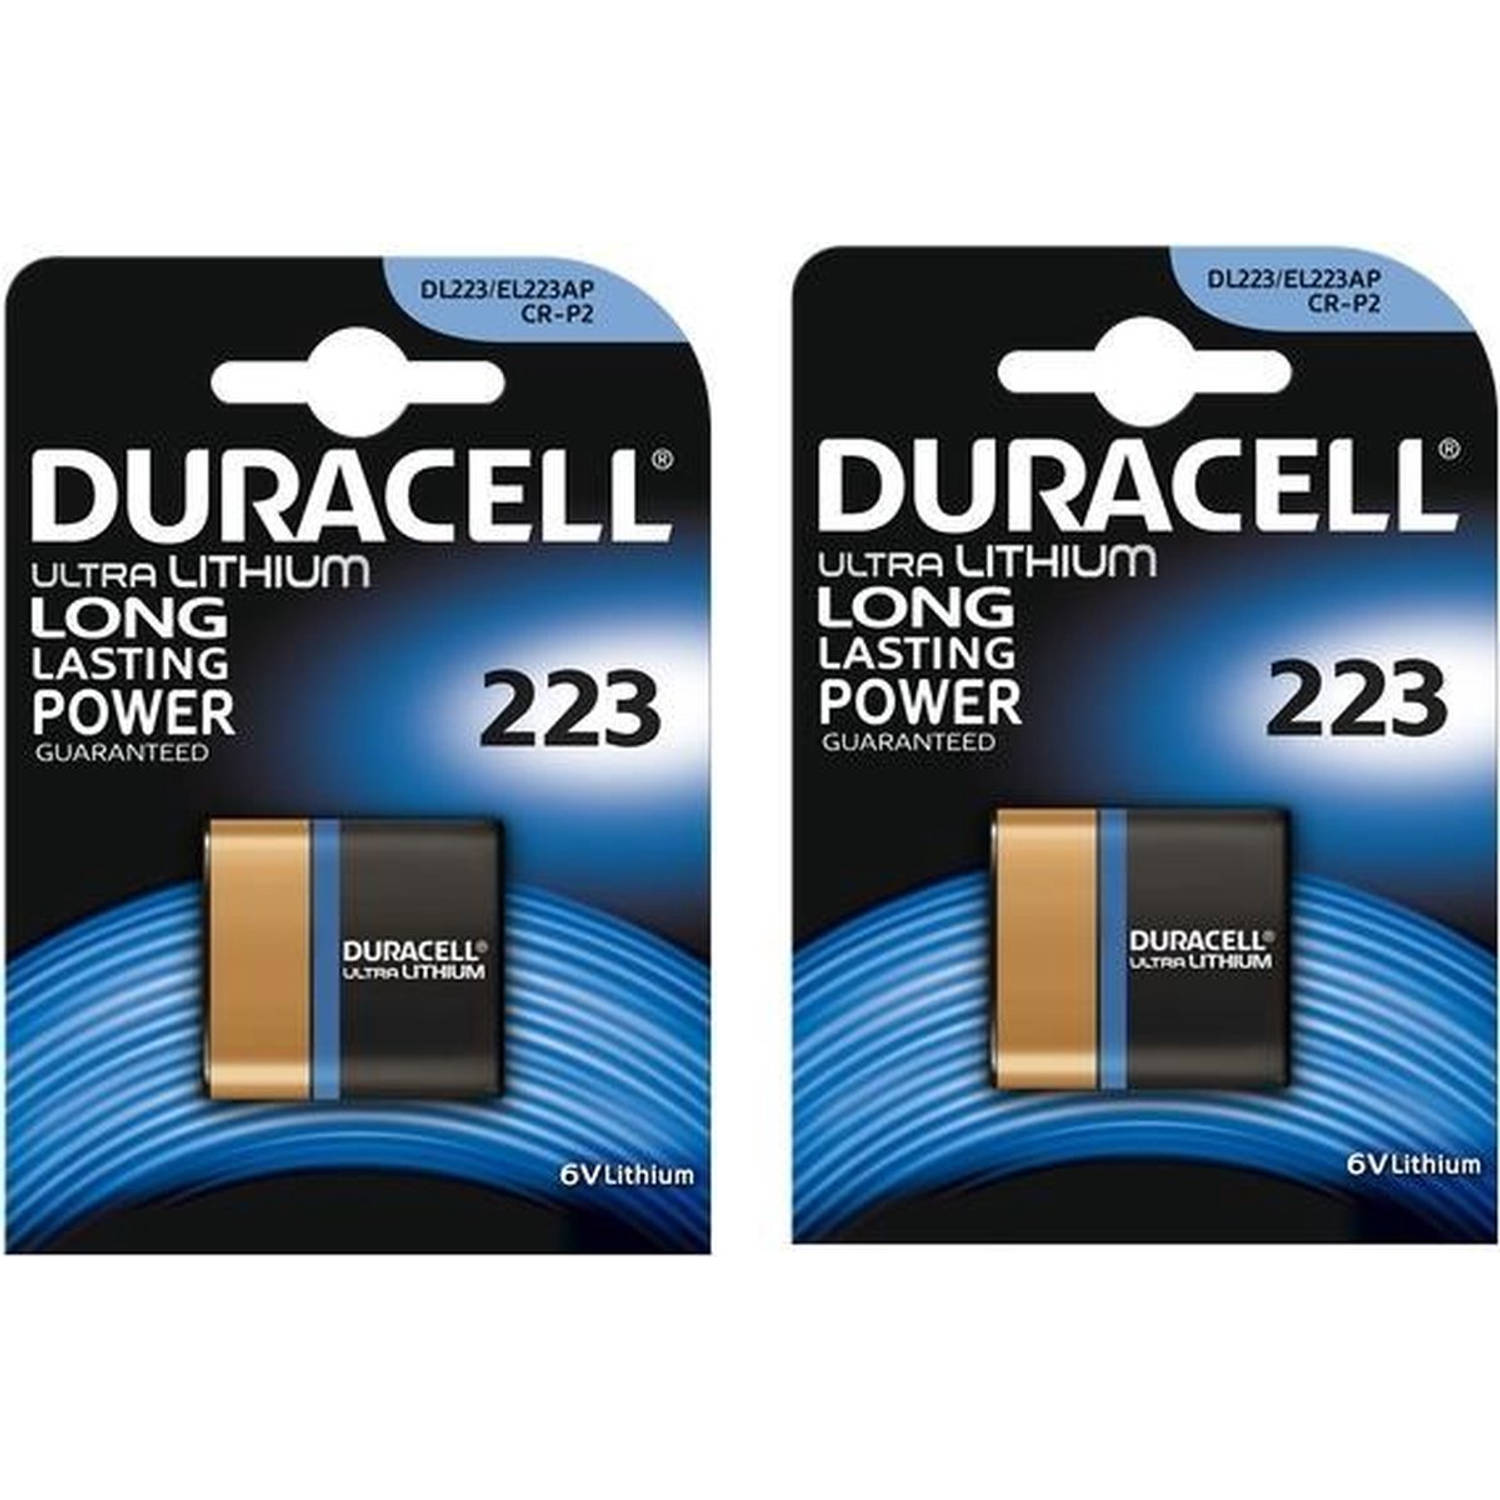 2 Stuks Duracell Crp2-223-Dl223-El223ap-Cr-p2 6v Lithium Batterij